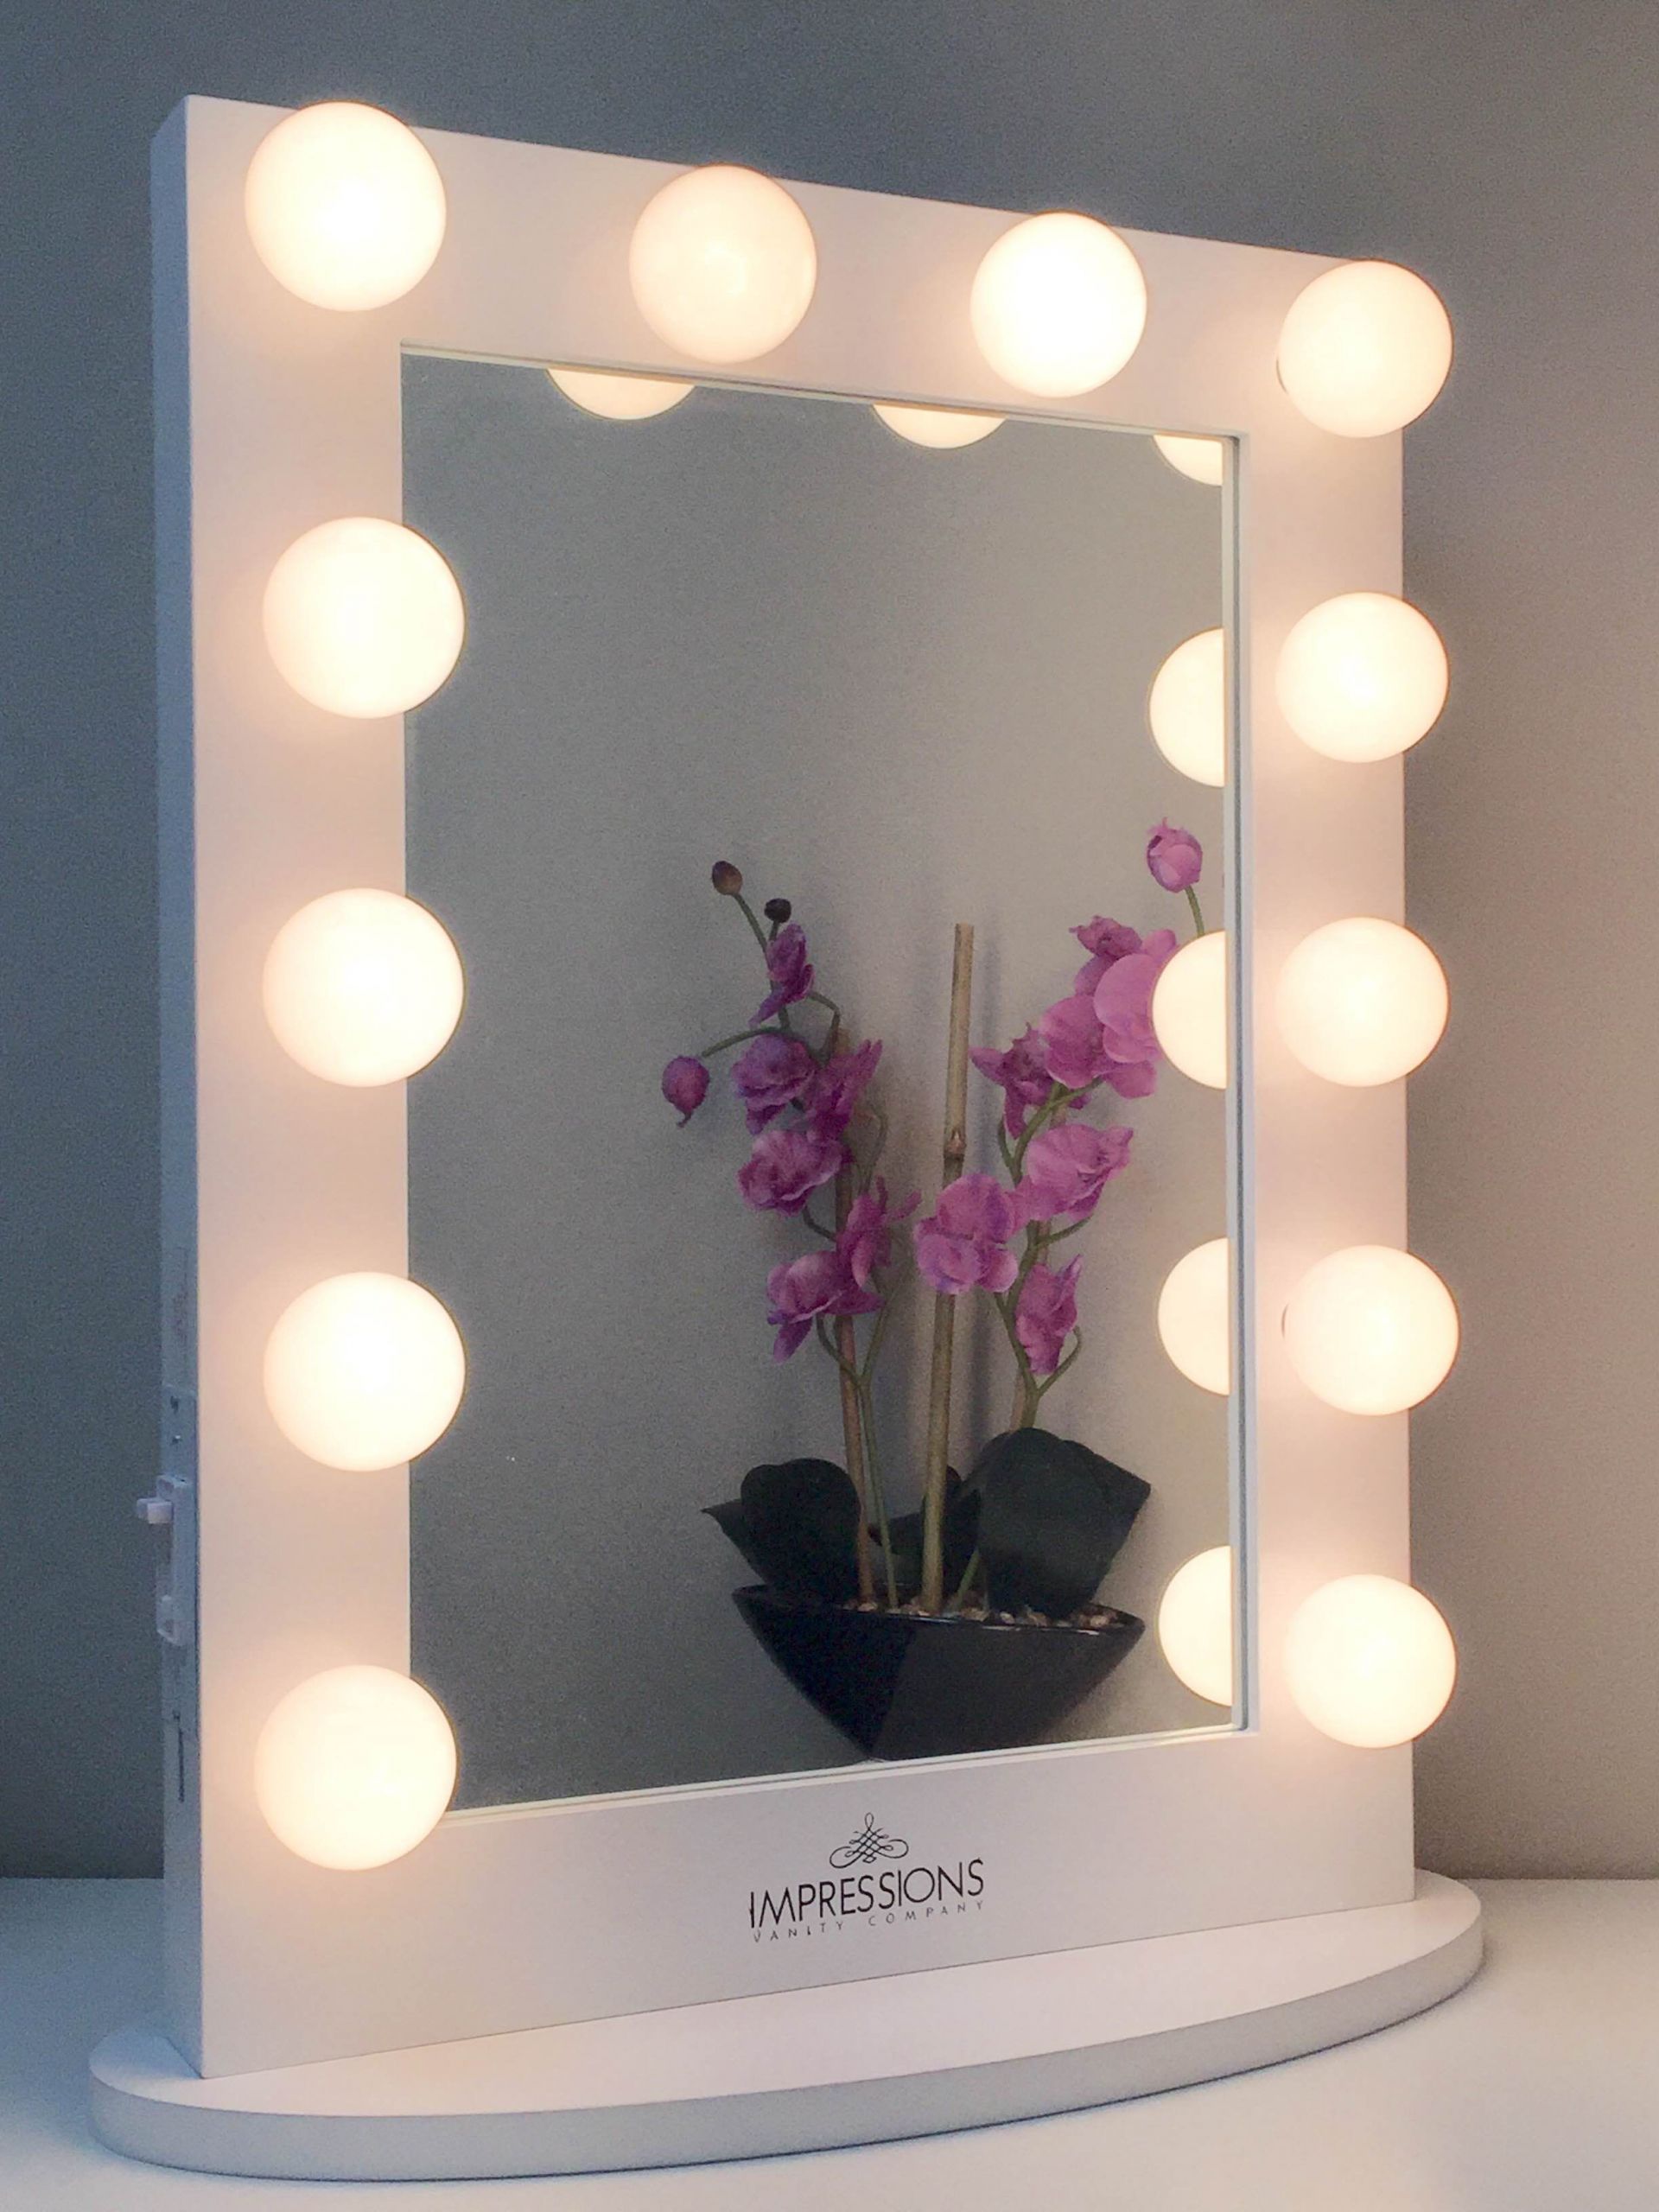 Hollywood Vanity Mirror DIY
 The 25 best Hollywood vanity mirror ideas on Pinterest